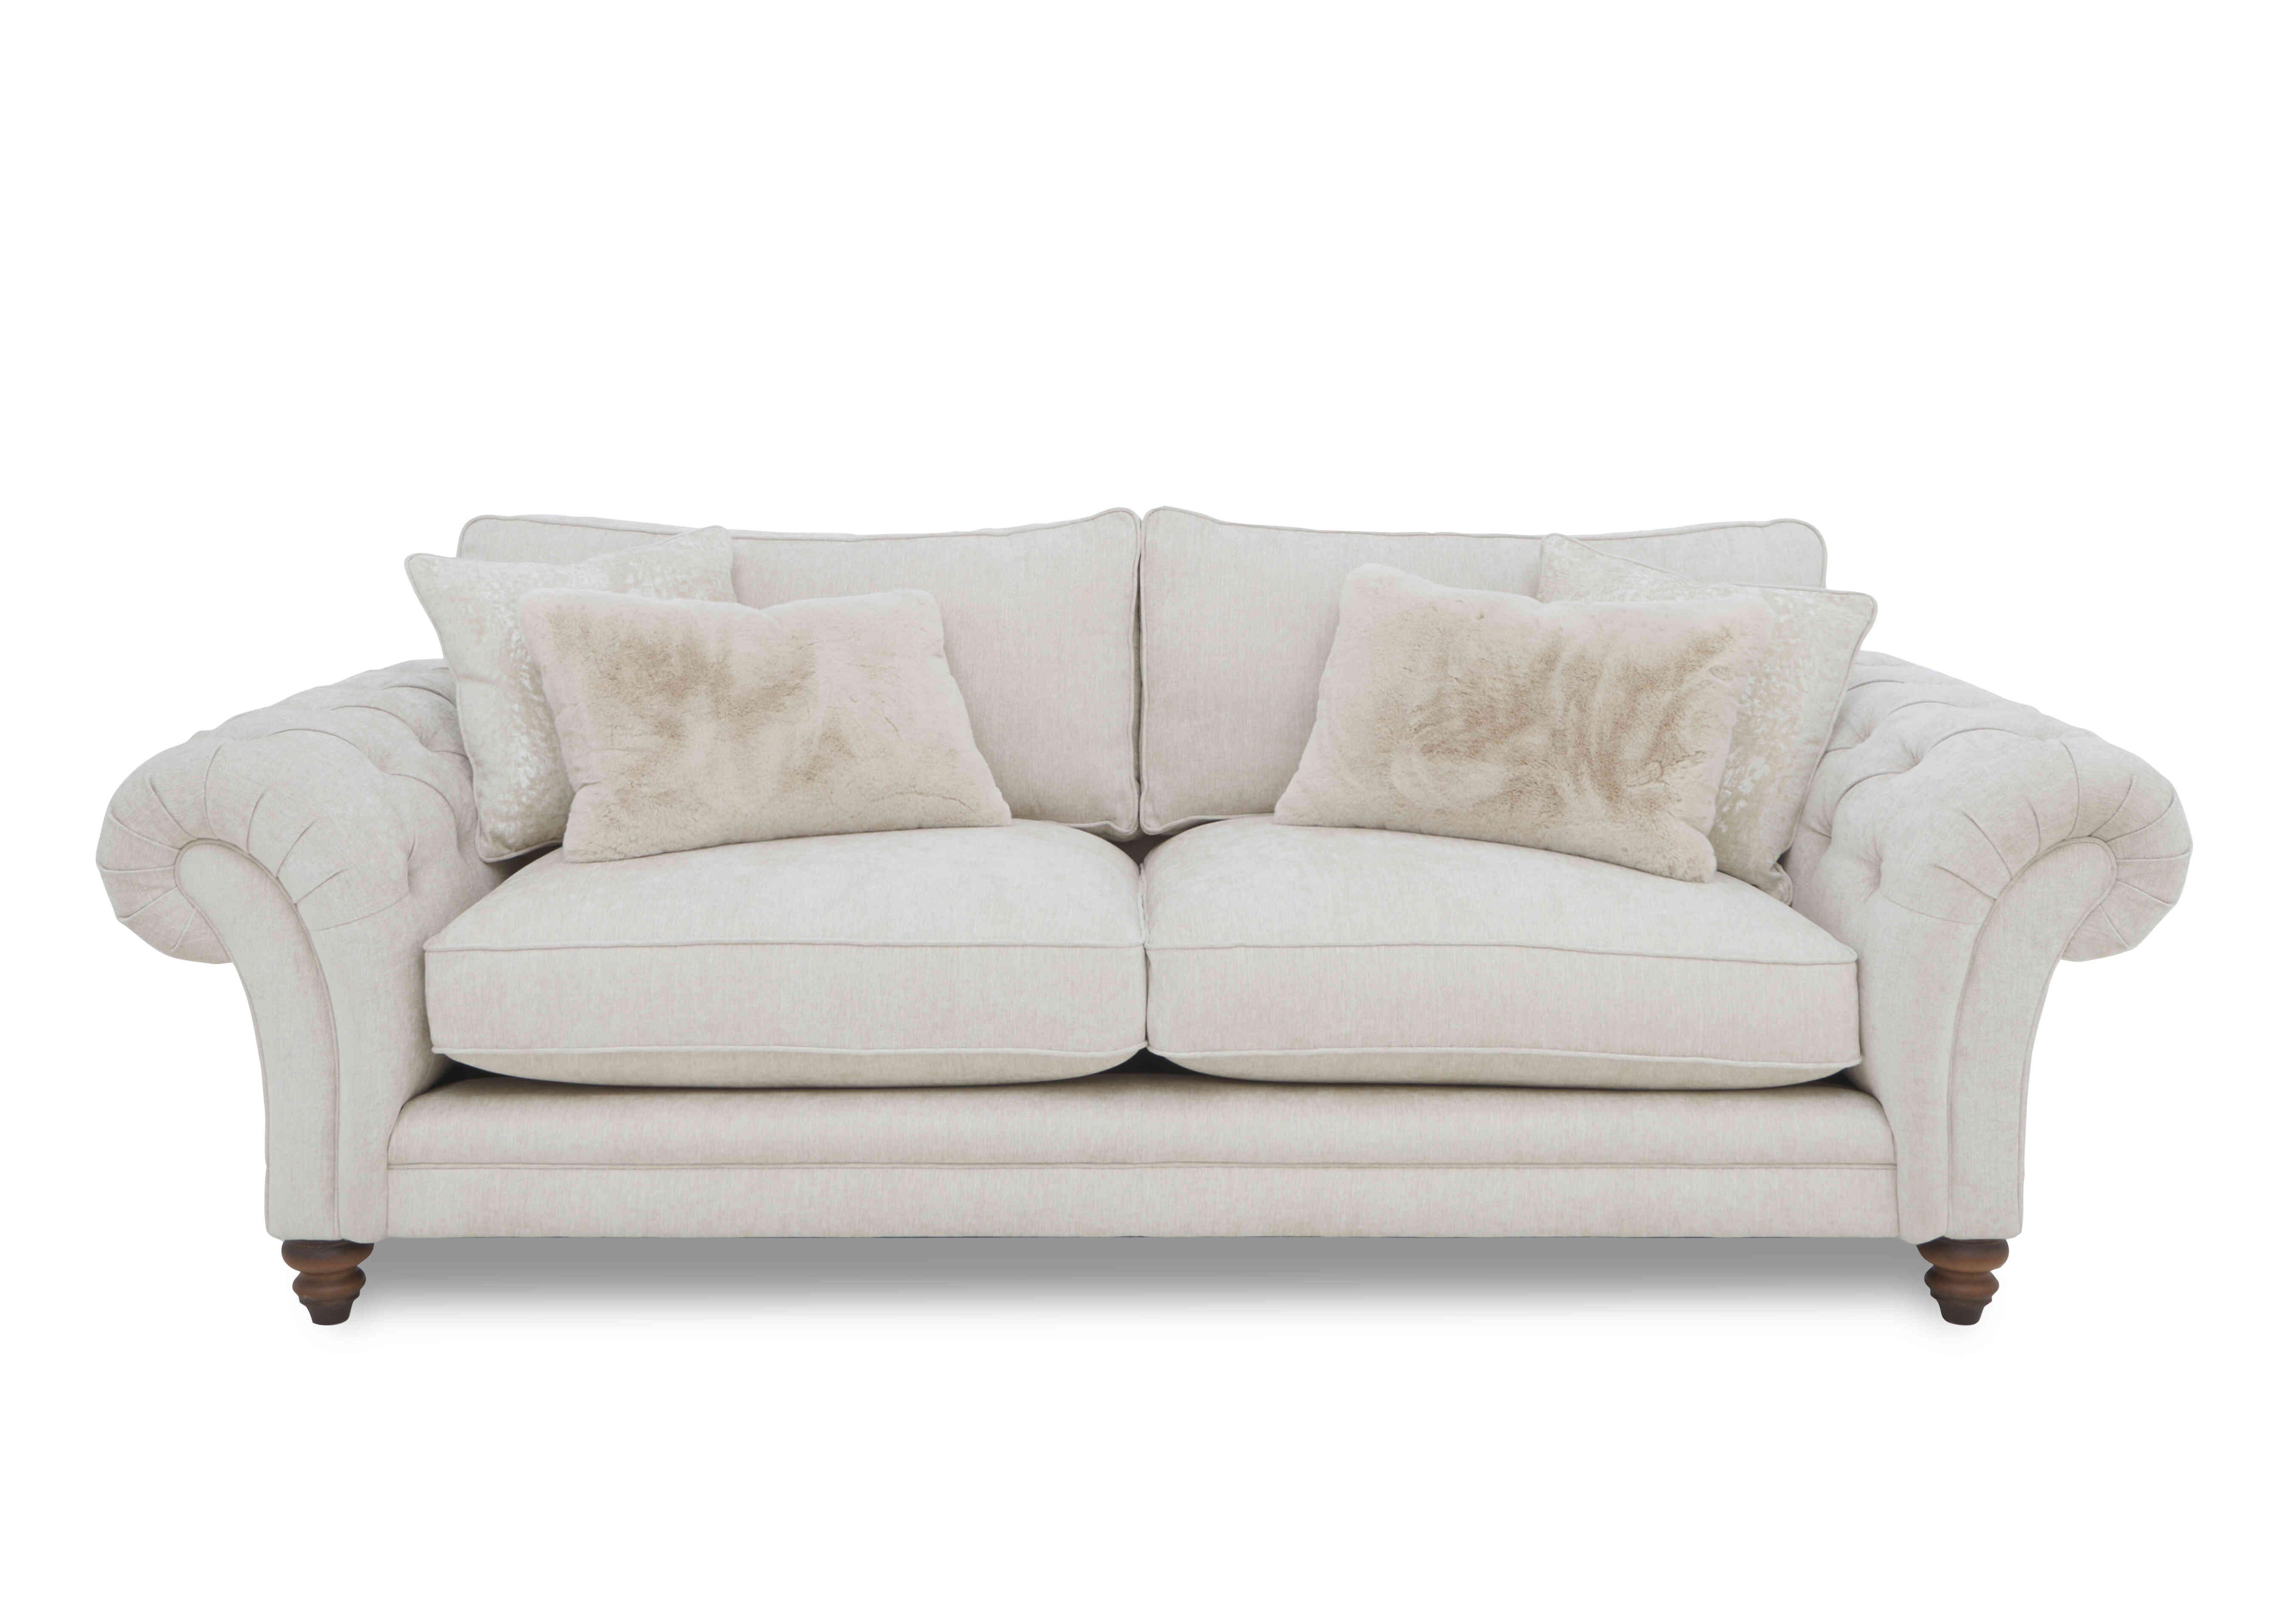 Blenheim 4 Seater Classic Back Sofa in Darwin Ivory Wf on Furniture Village